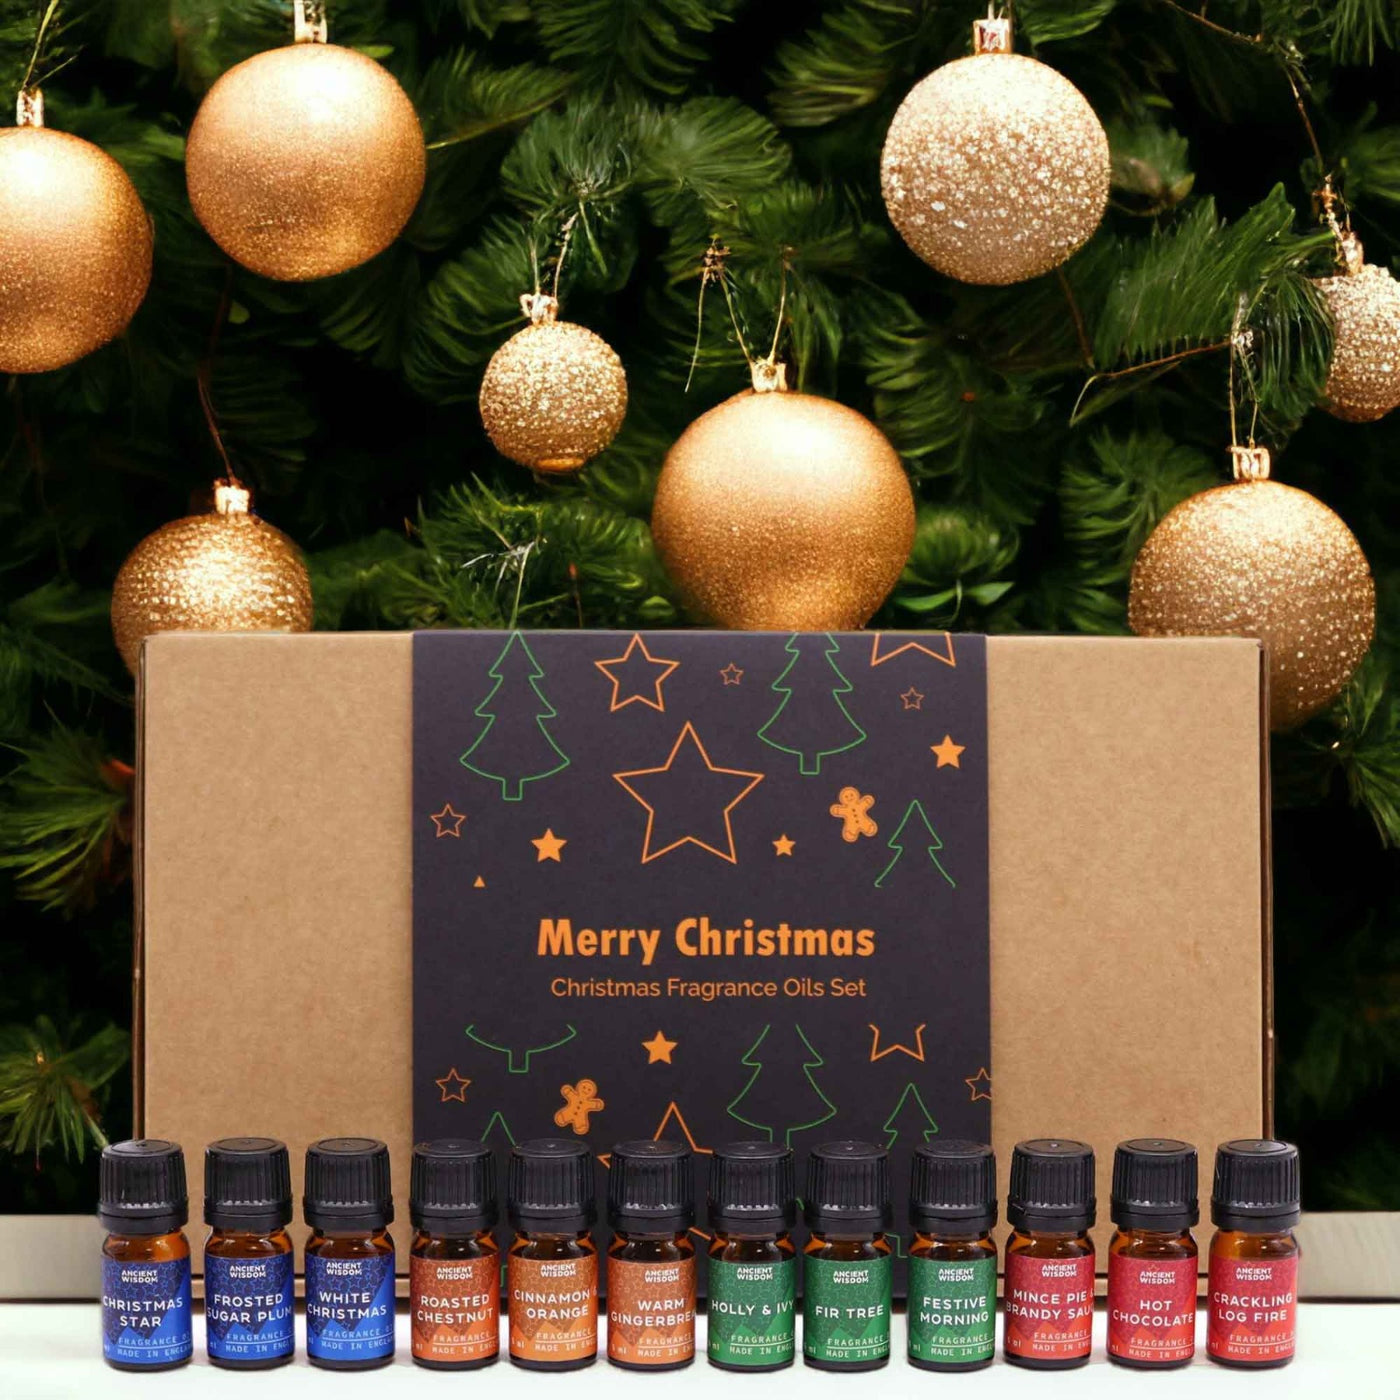 Festive Christmas Scented Home Fragrance Oils Gift Set. 